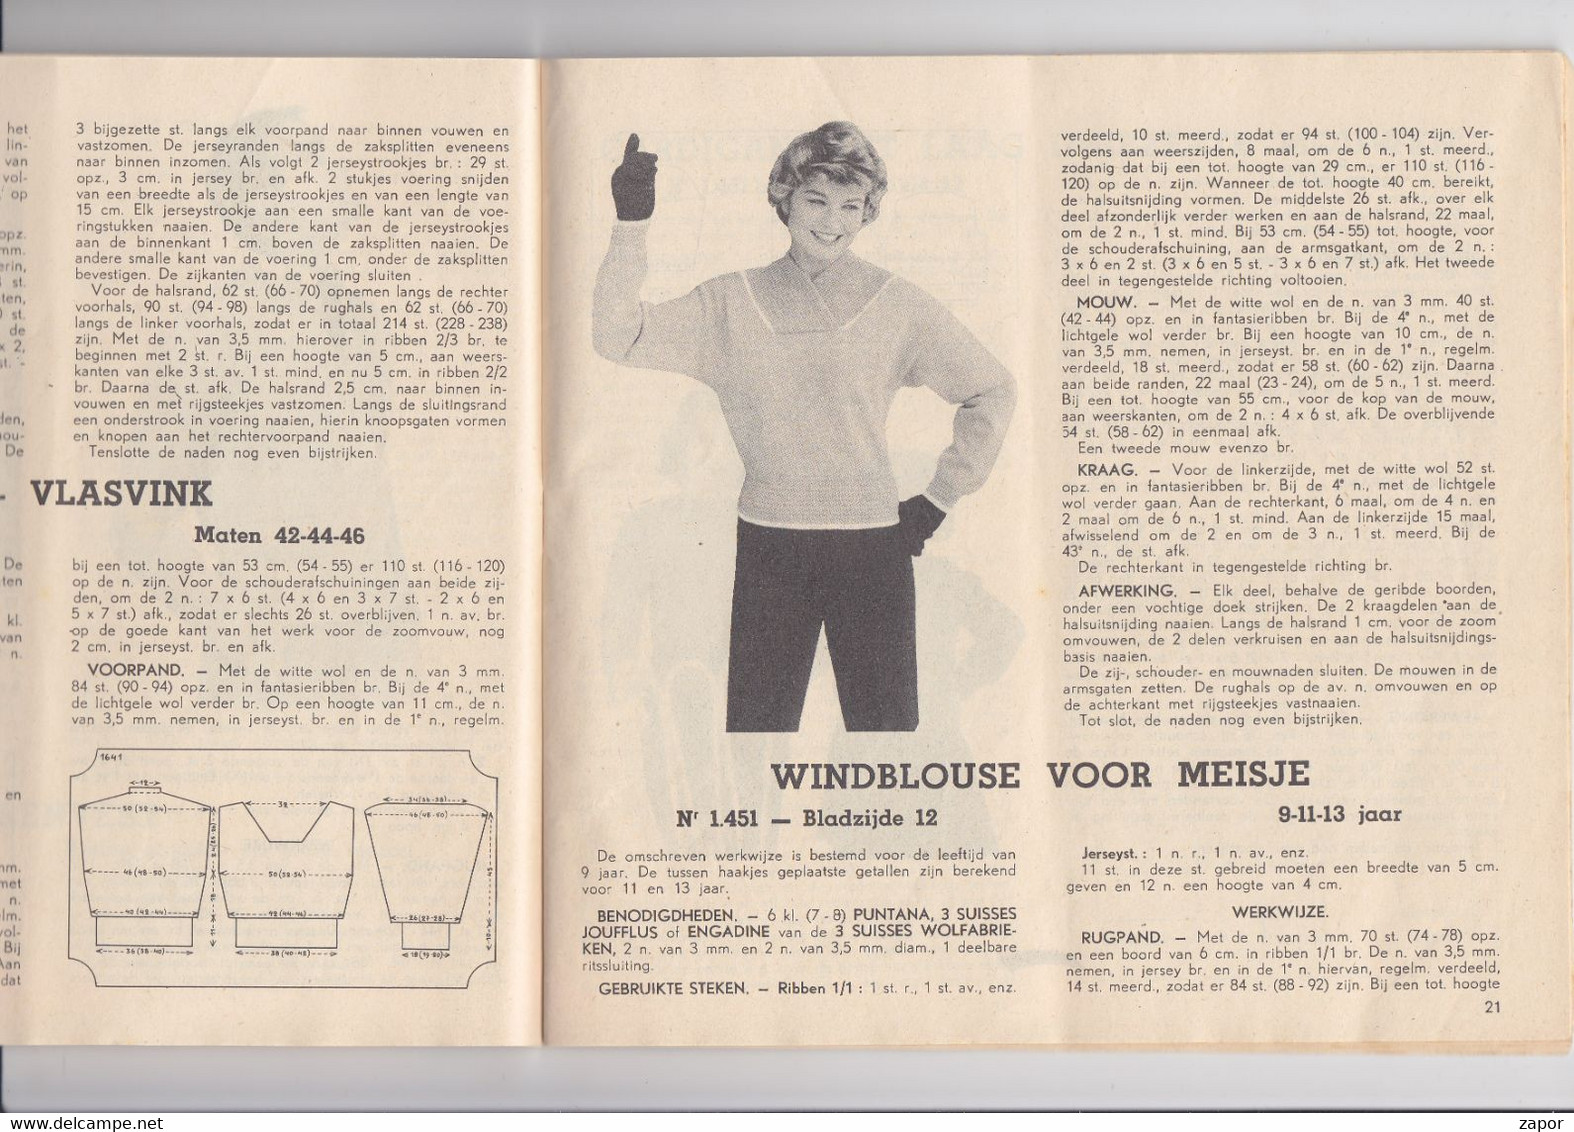 Uitleggingsboekje Van De "3 SUISSES" - Breiwerkgids - 1957 - Moda